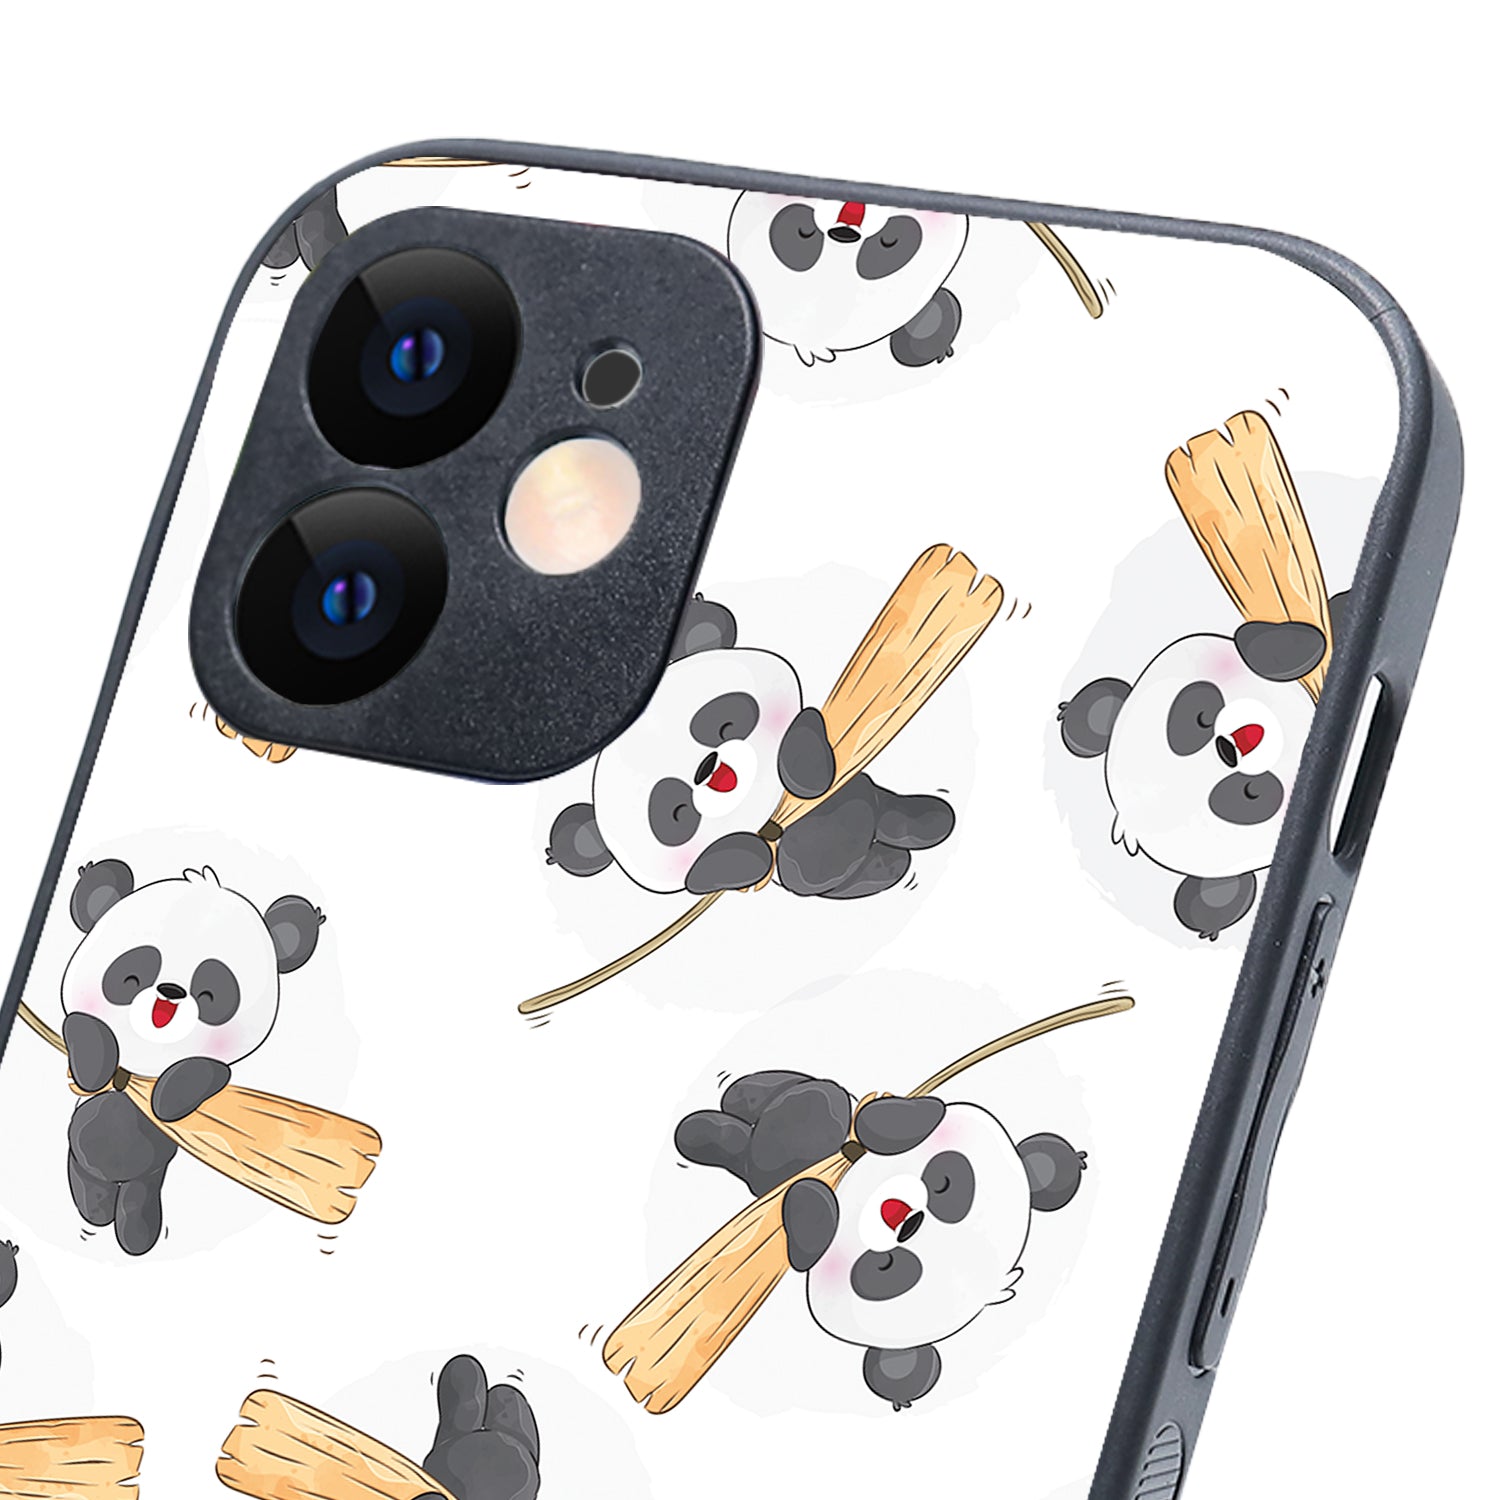 Sleep Panda Cartoon iPhone 12 Case